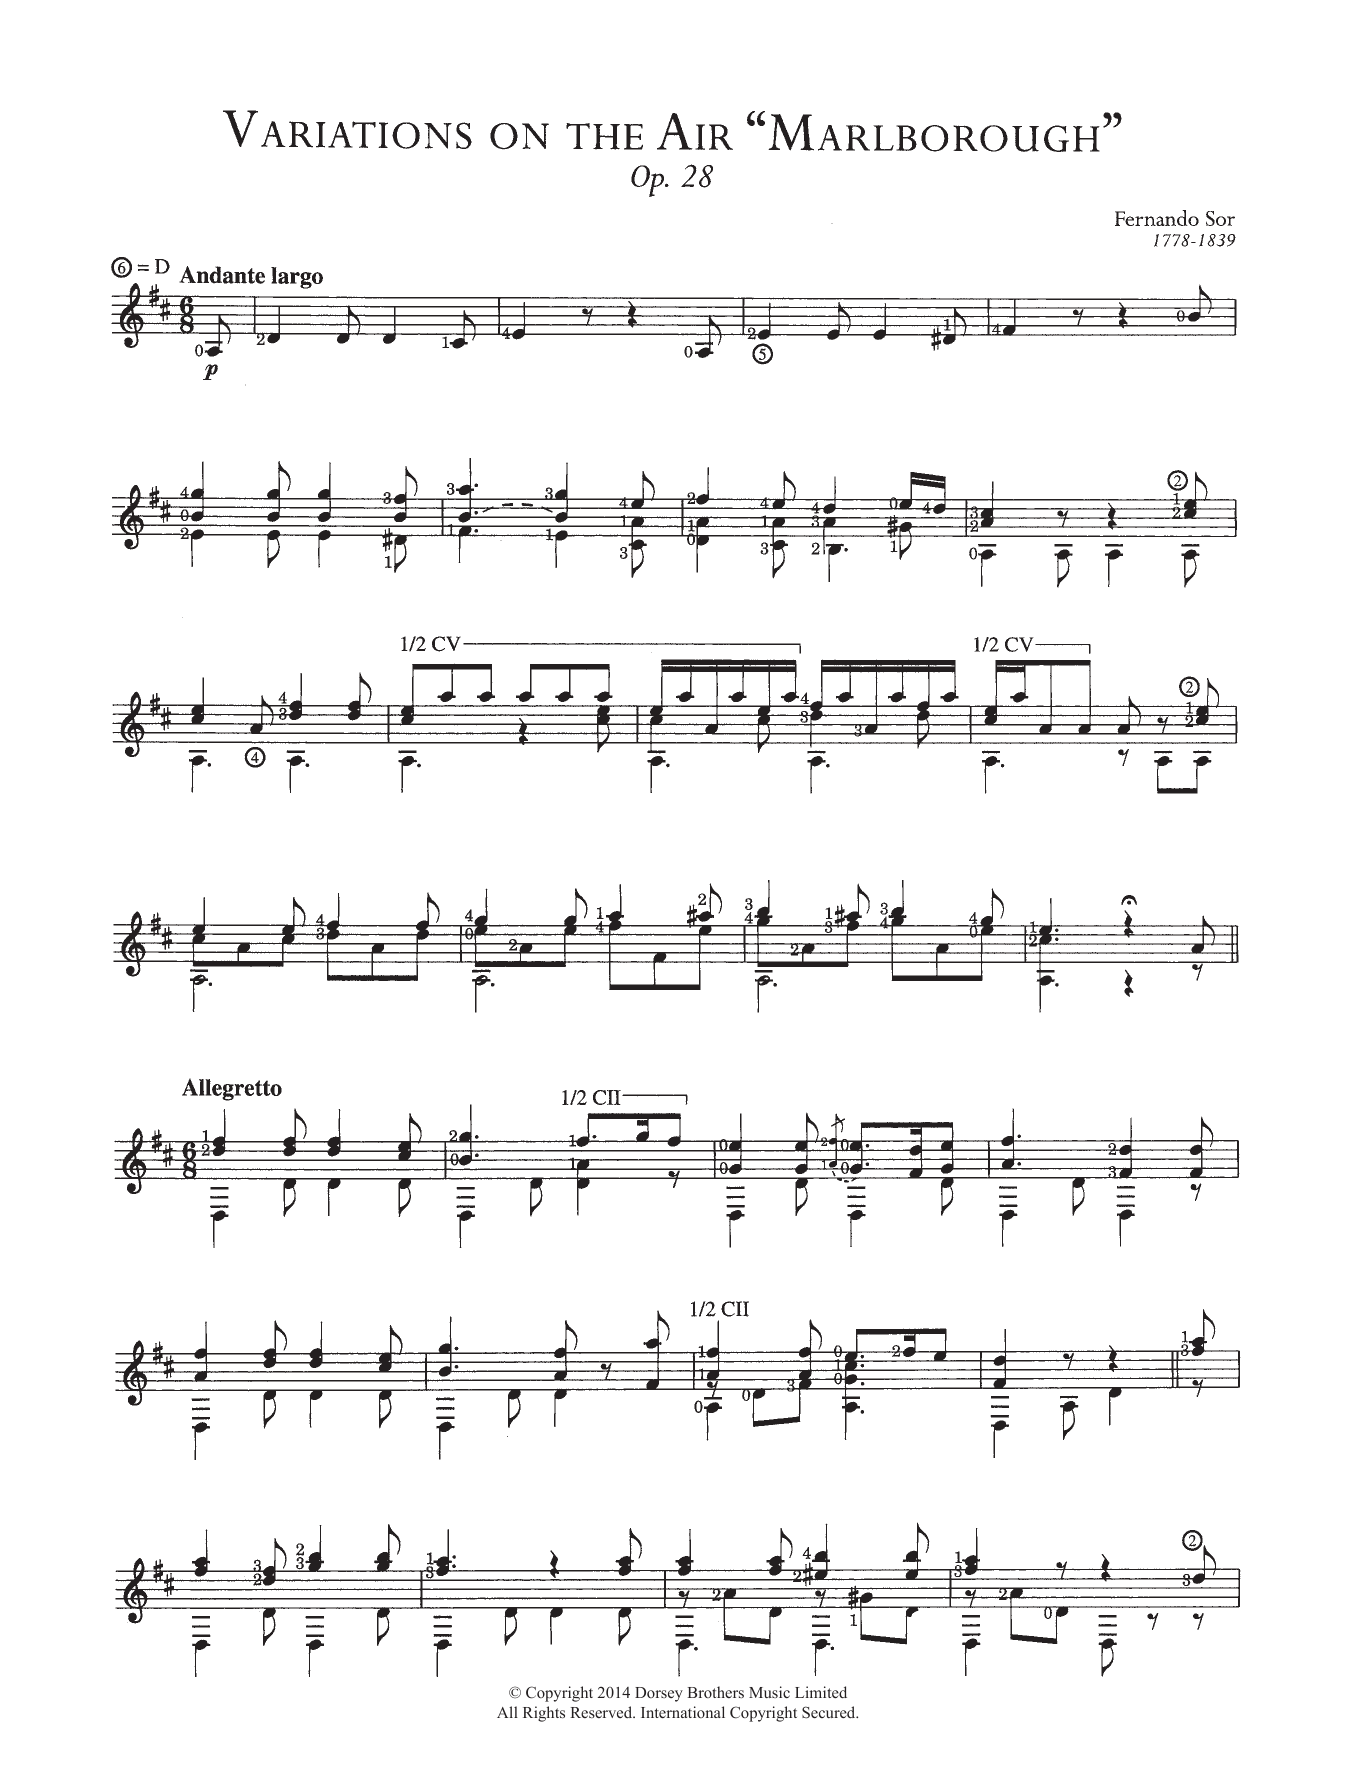 Fernando Sor Variations On The Air 'Marlborough', Op.28 Sheet Music Notes & Chords for Guitar - Download or Print PDF